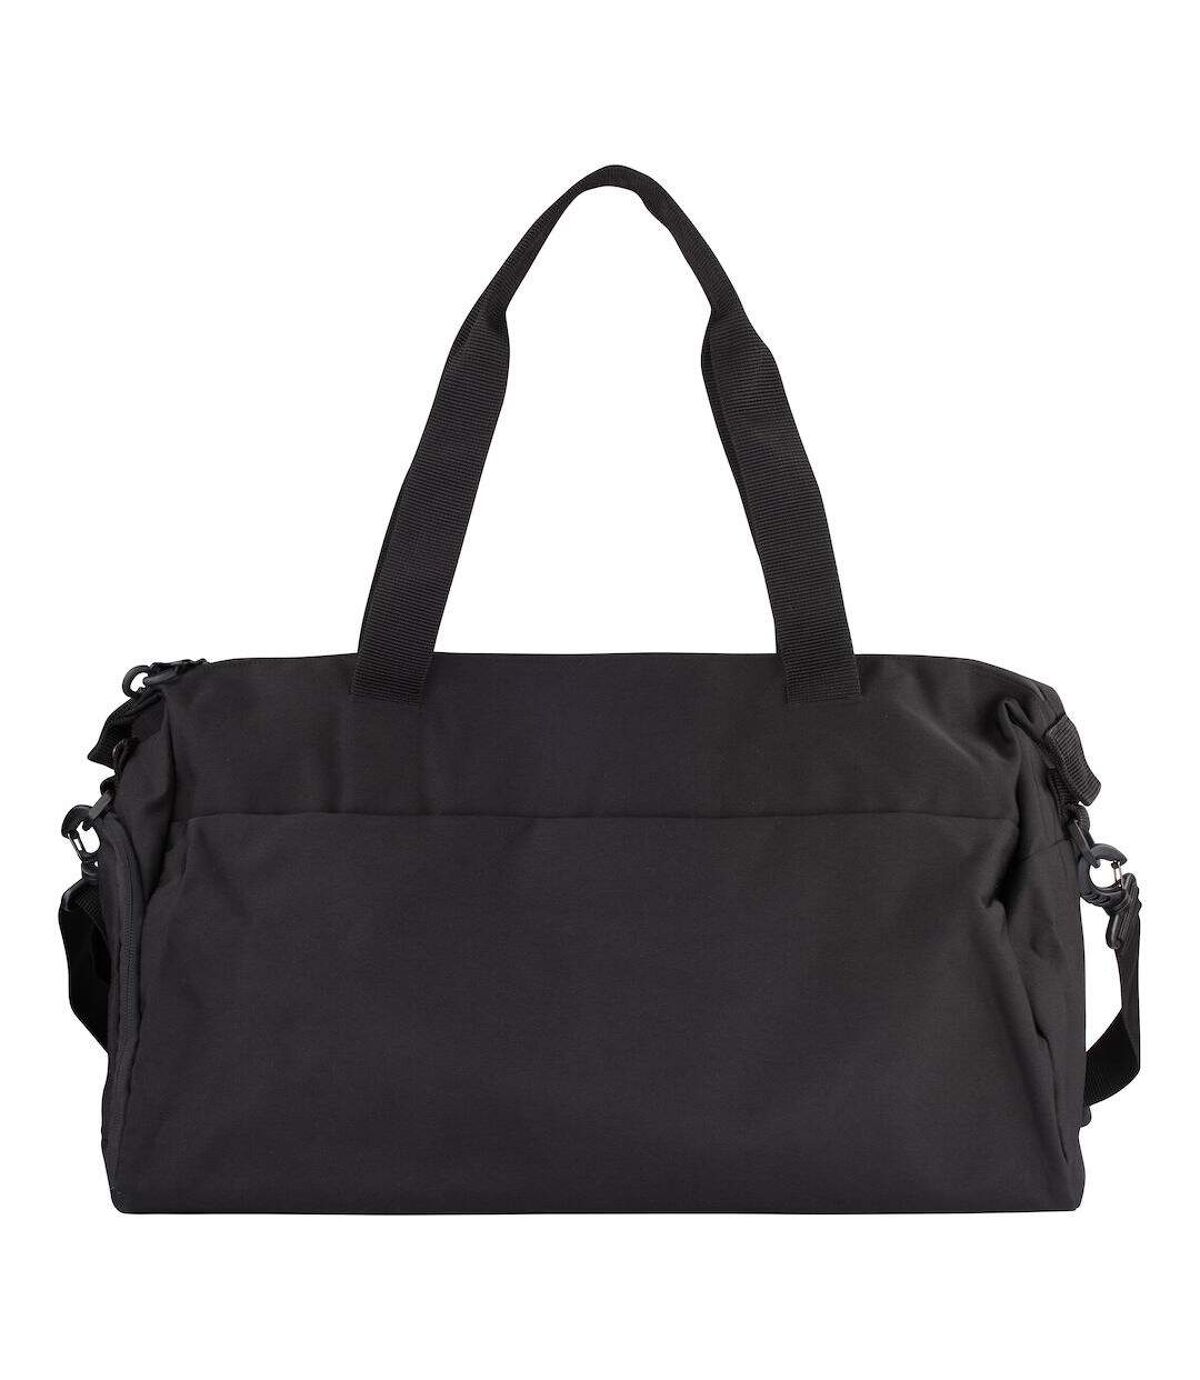 Clique 2.0 Duffle Bag (Black) (One Size)